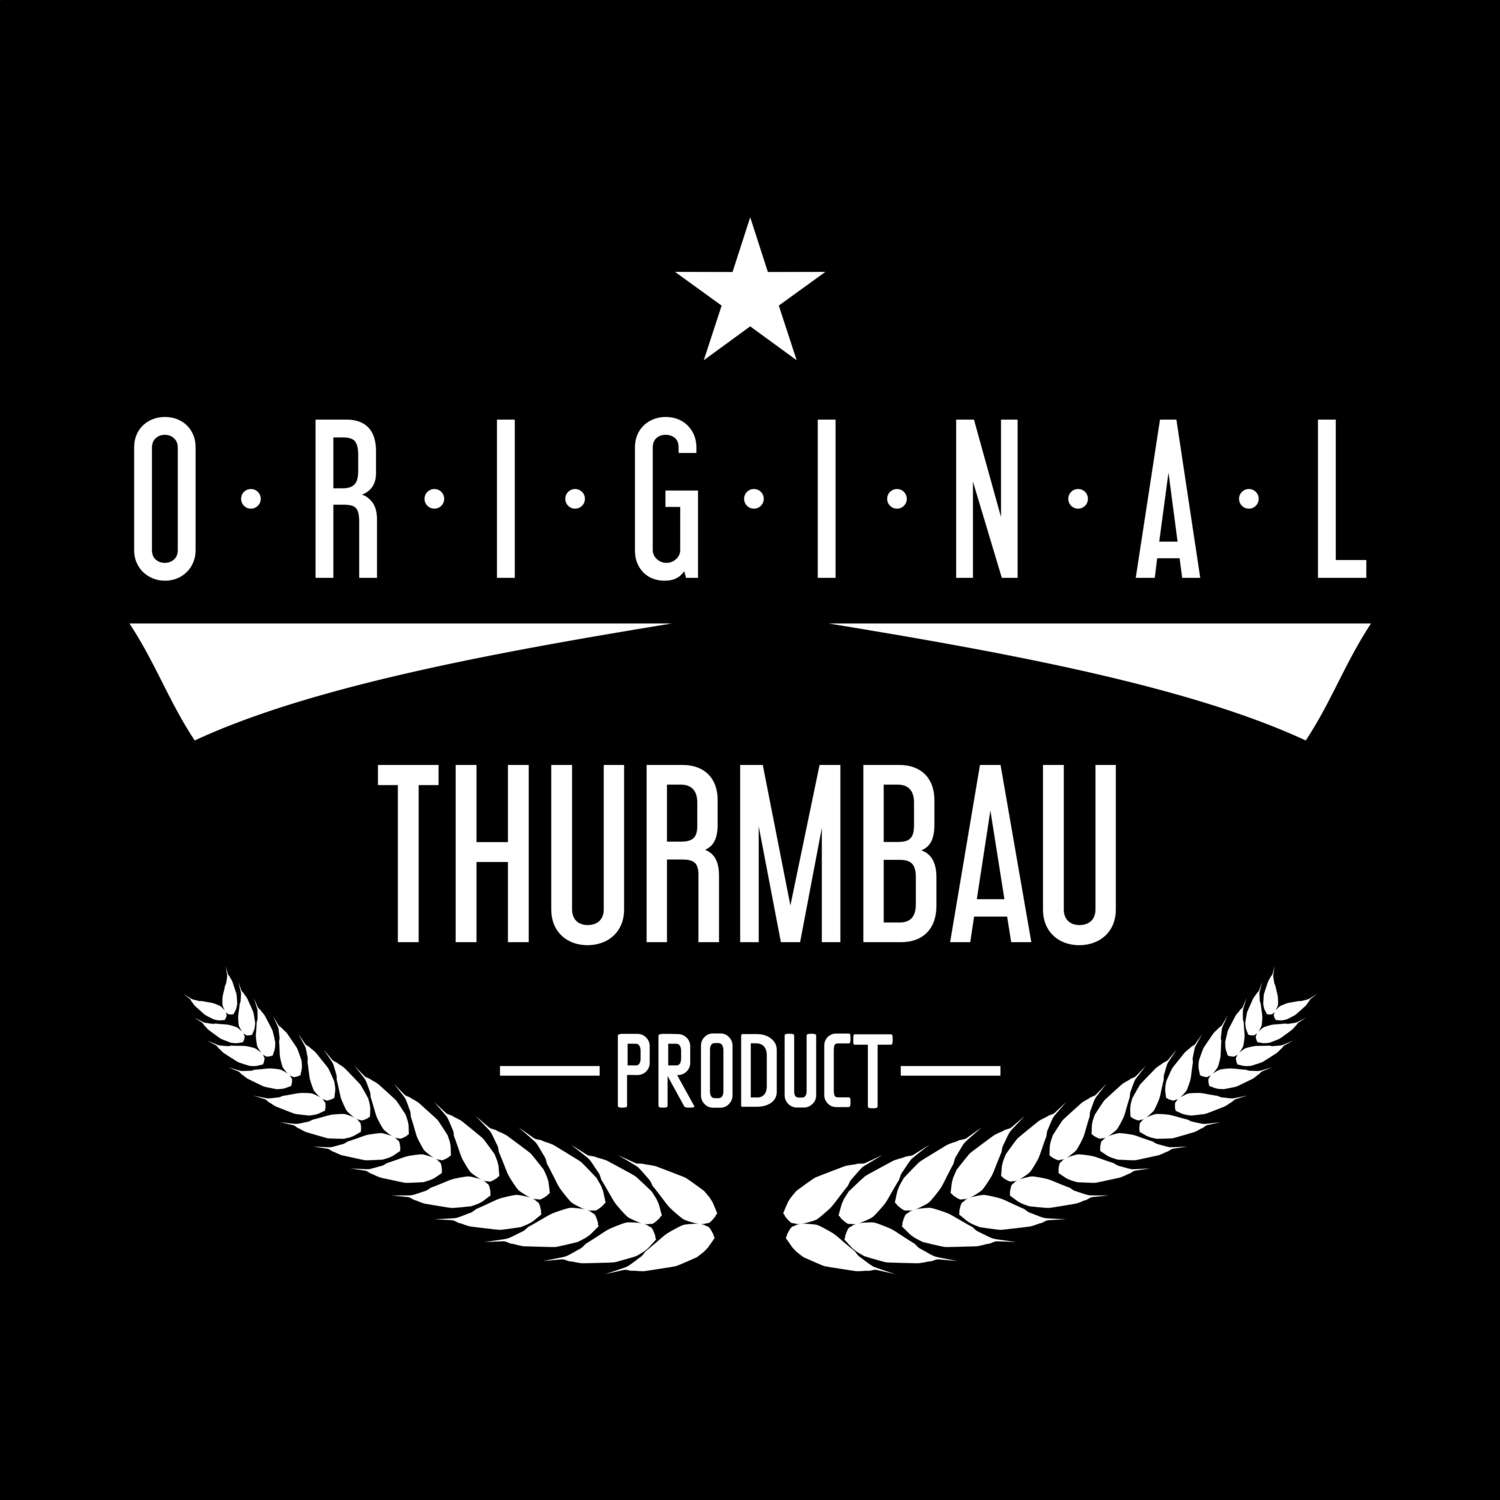 Thurmbau T-Shirt »Original Product«